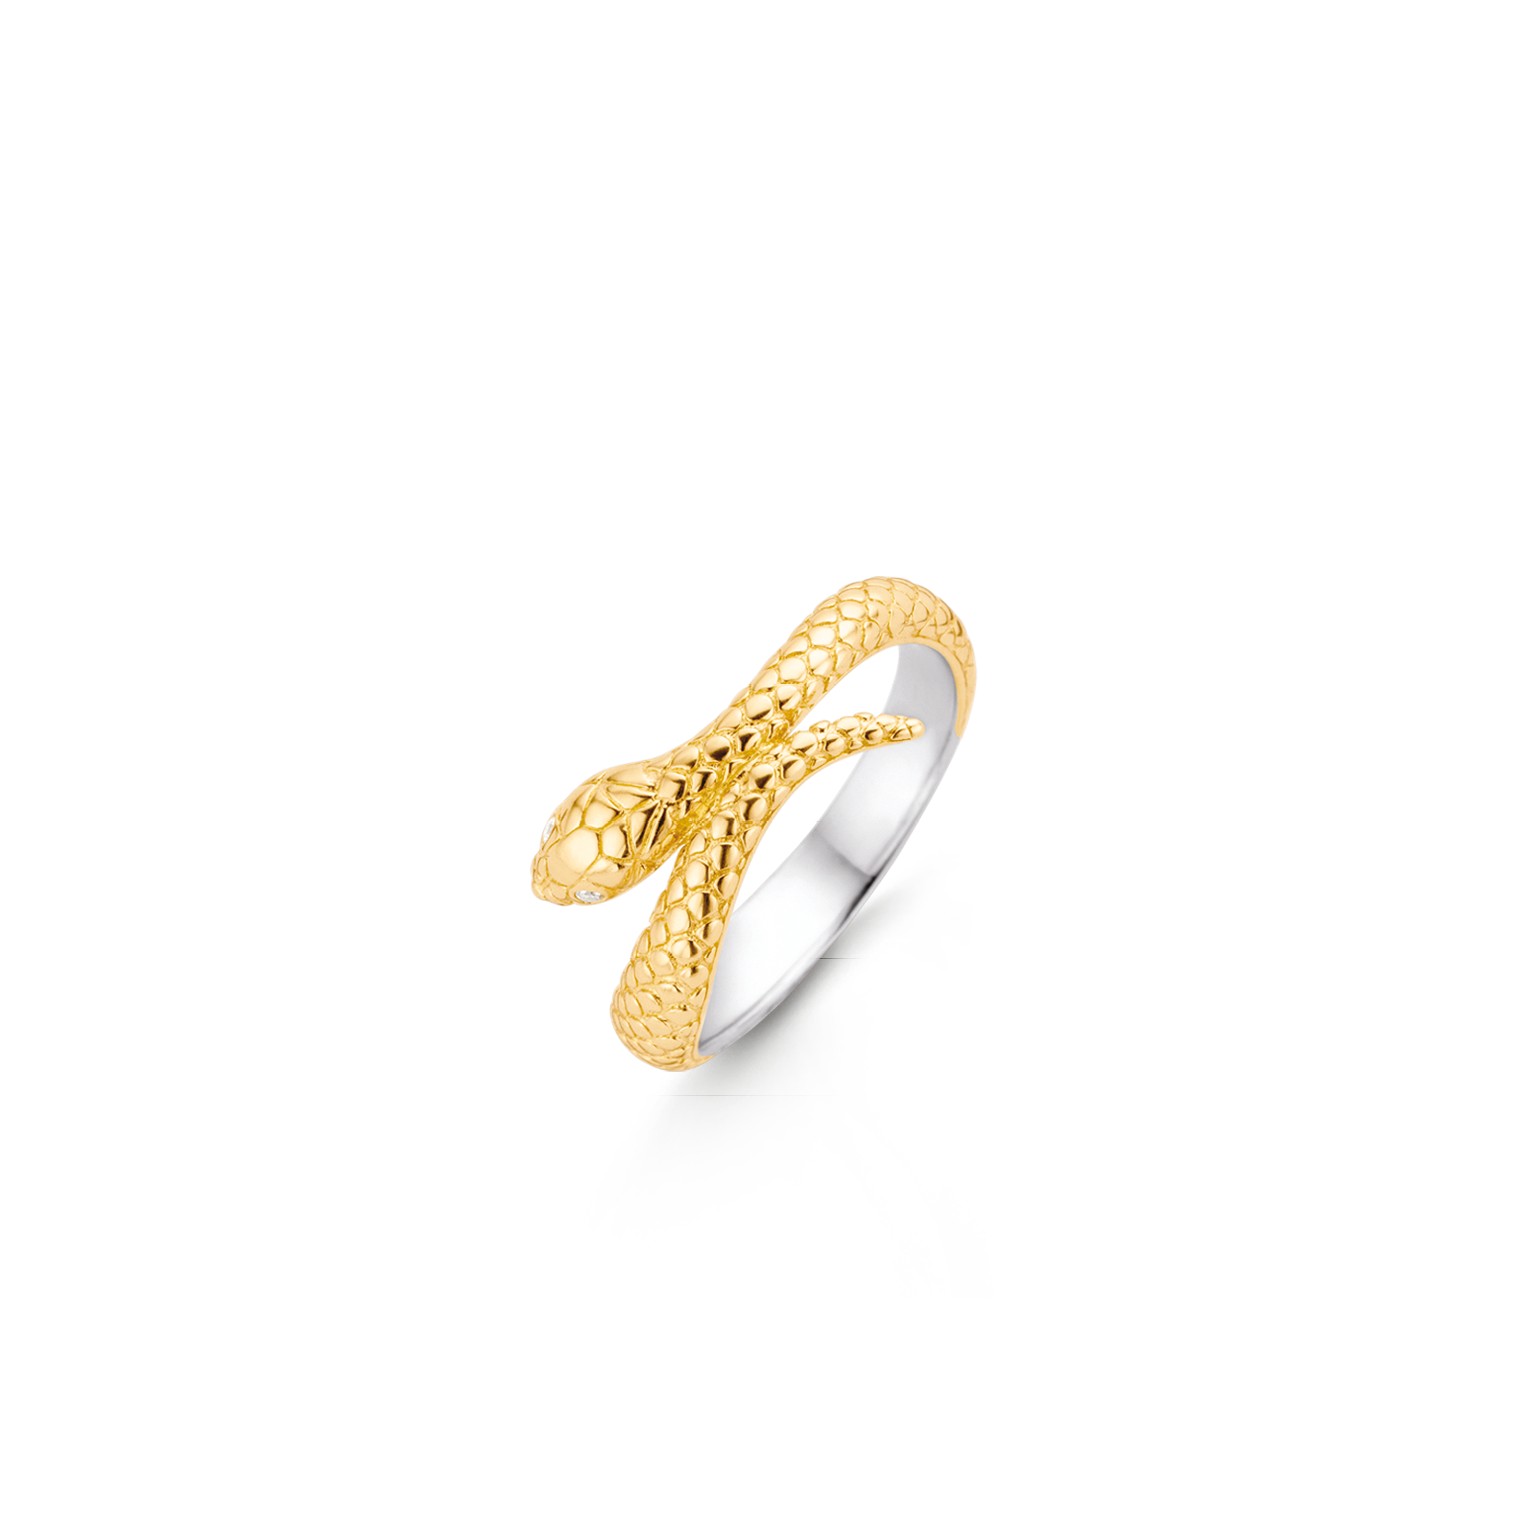 TI SENTO - Milano Ring 12160SY Gala Jewelers Inc. White Oak, PA